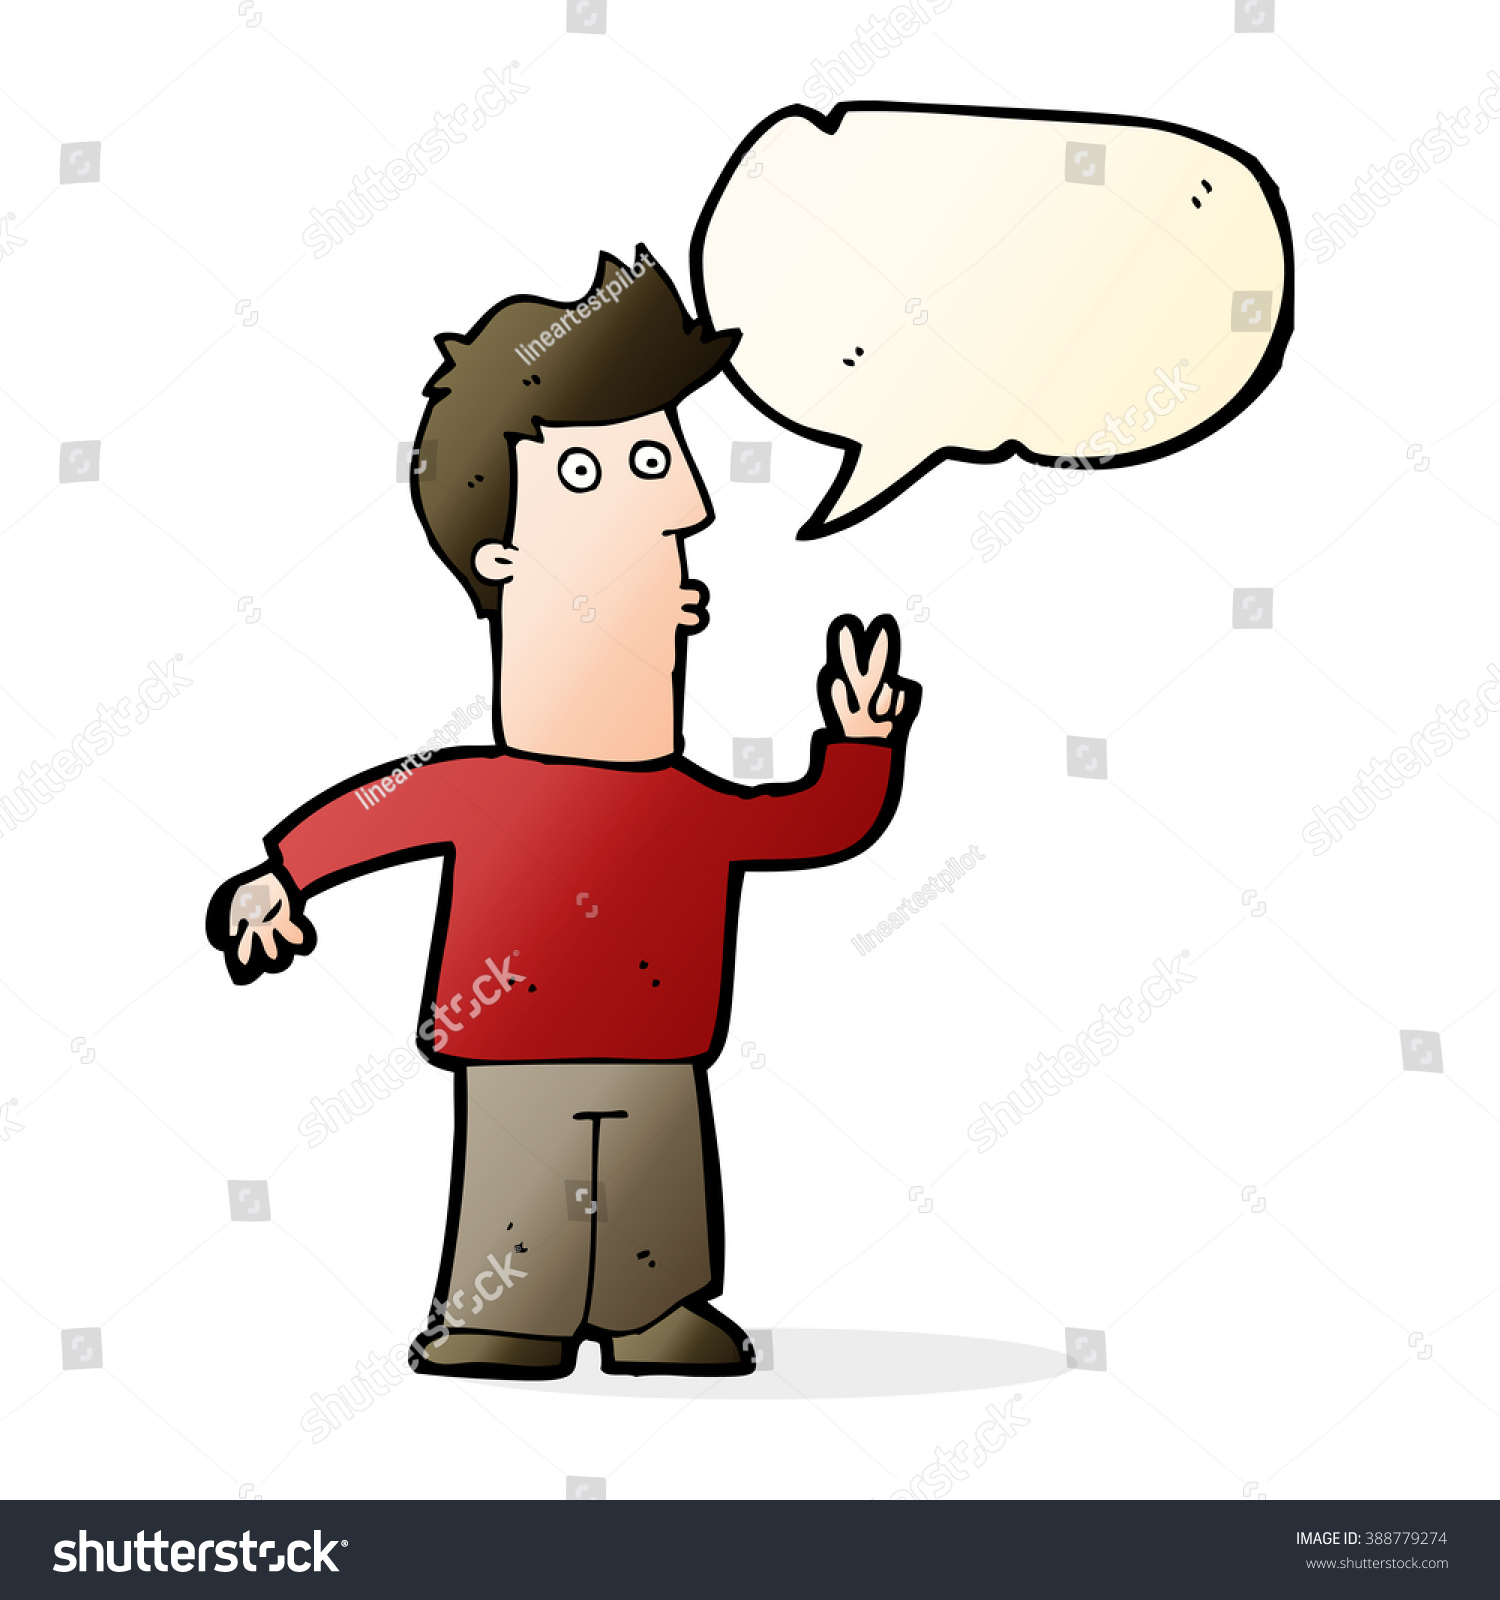 Cartoon Man Signaling Hand Speech Bubble Stock Vector 388779274 ...